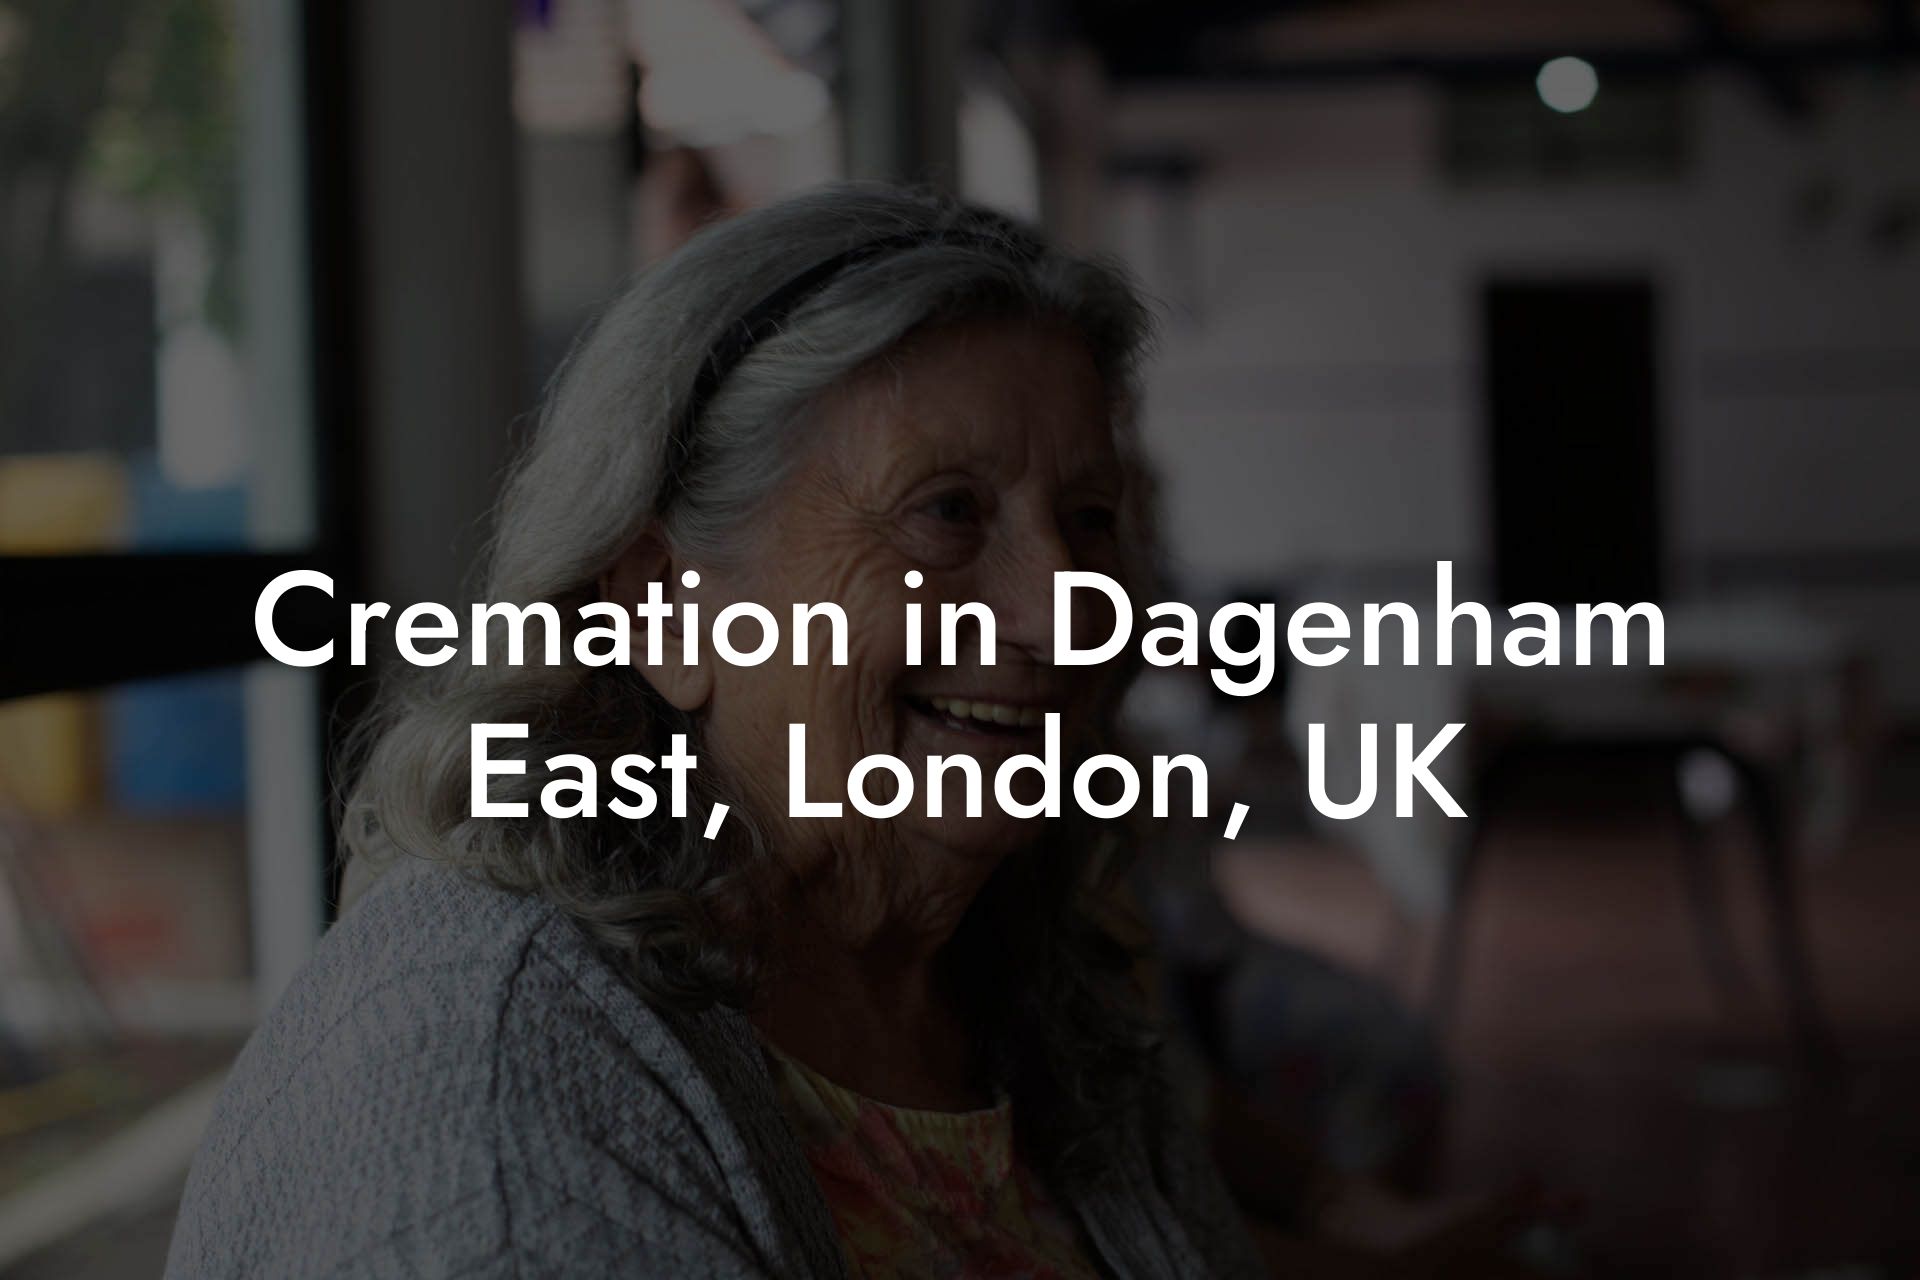 Cremation in Dagenham East, London, UK